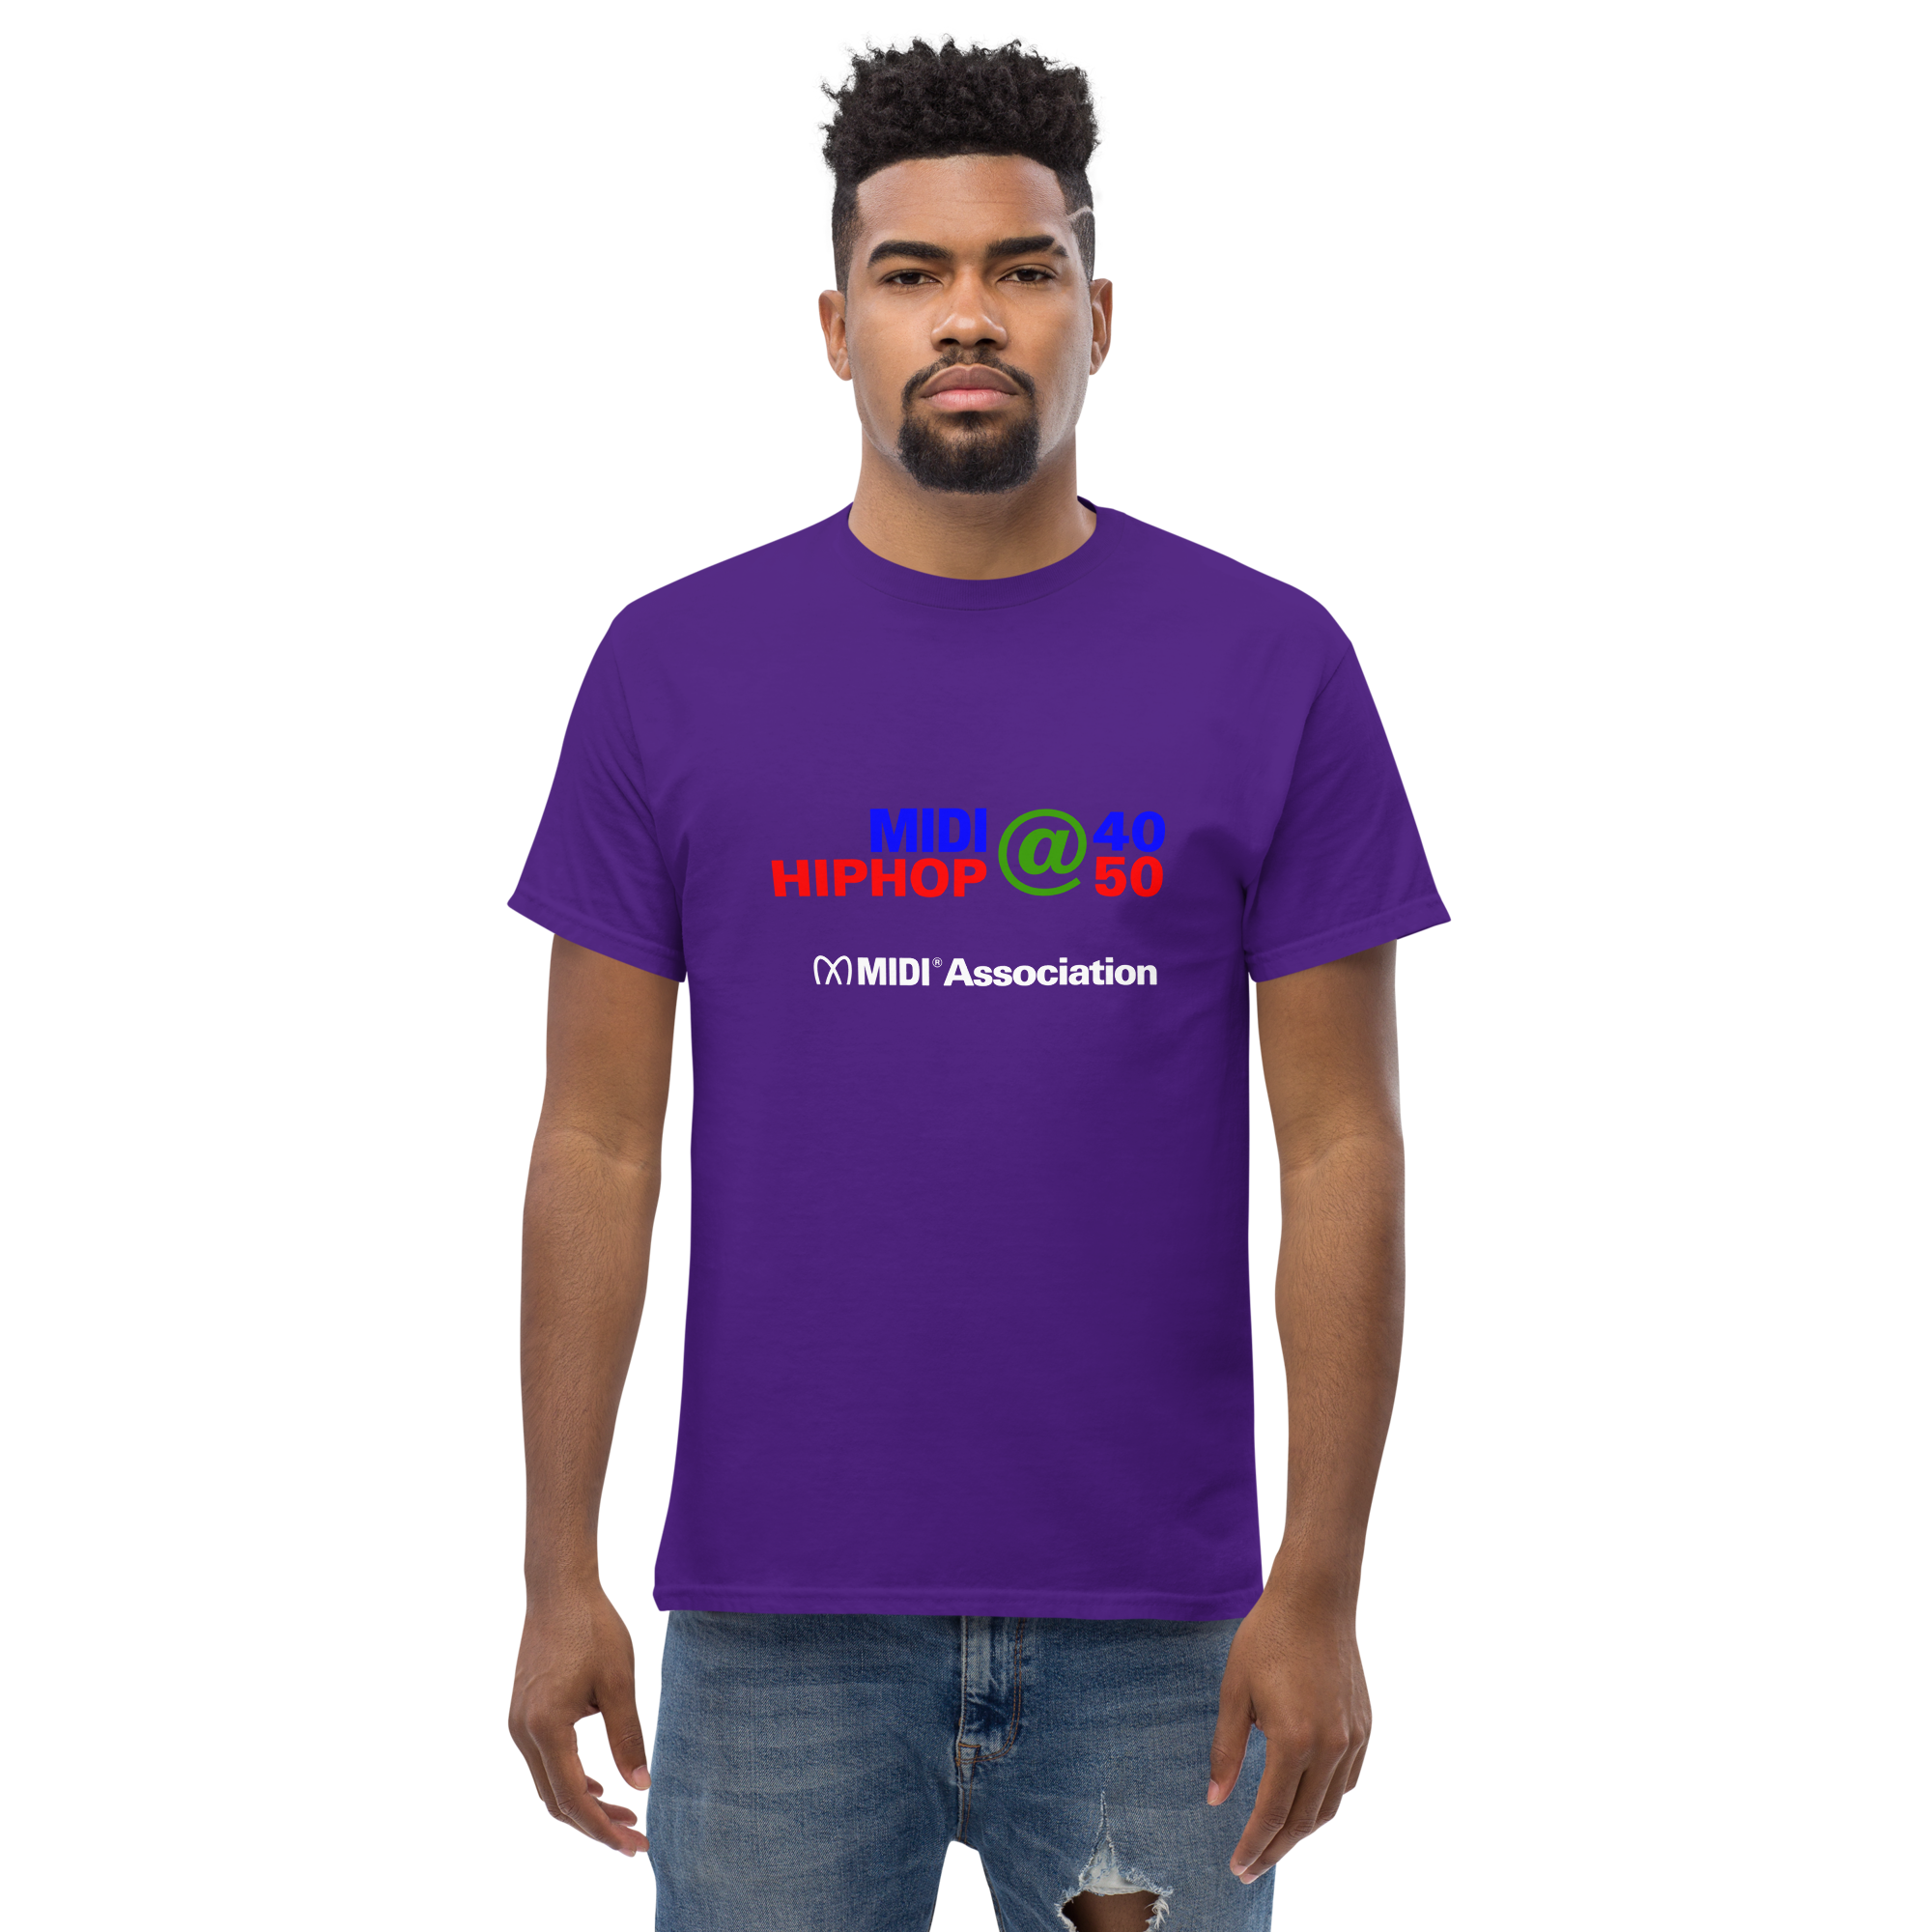 HipHop@50/MIDI@40 Tee Shirt with MIDI Association Logo